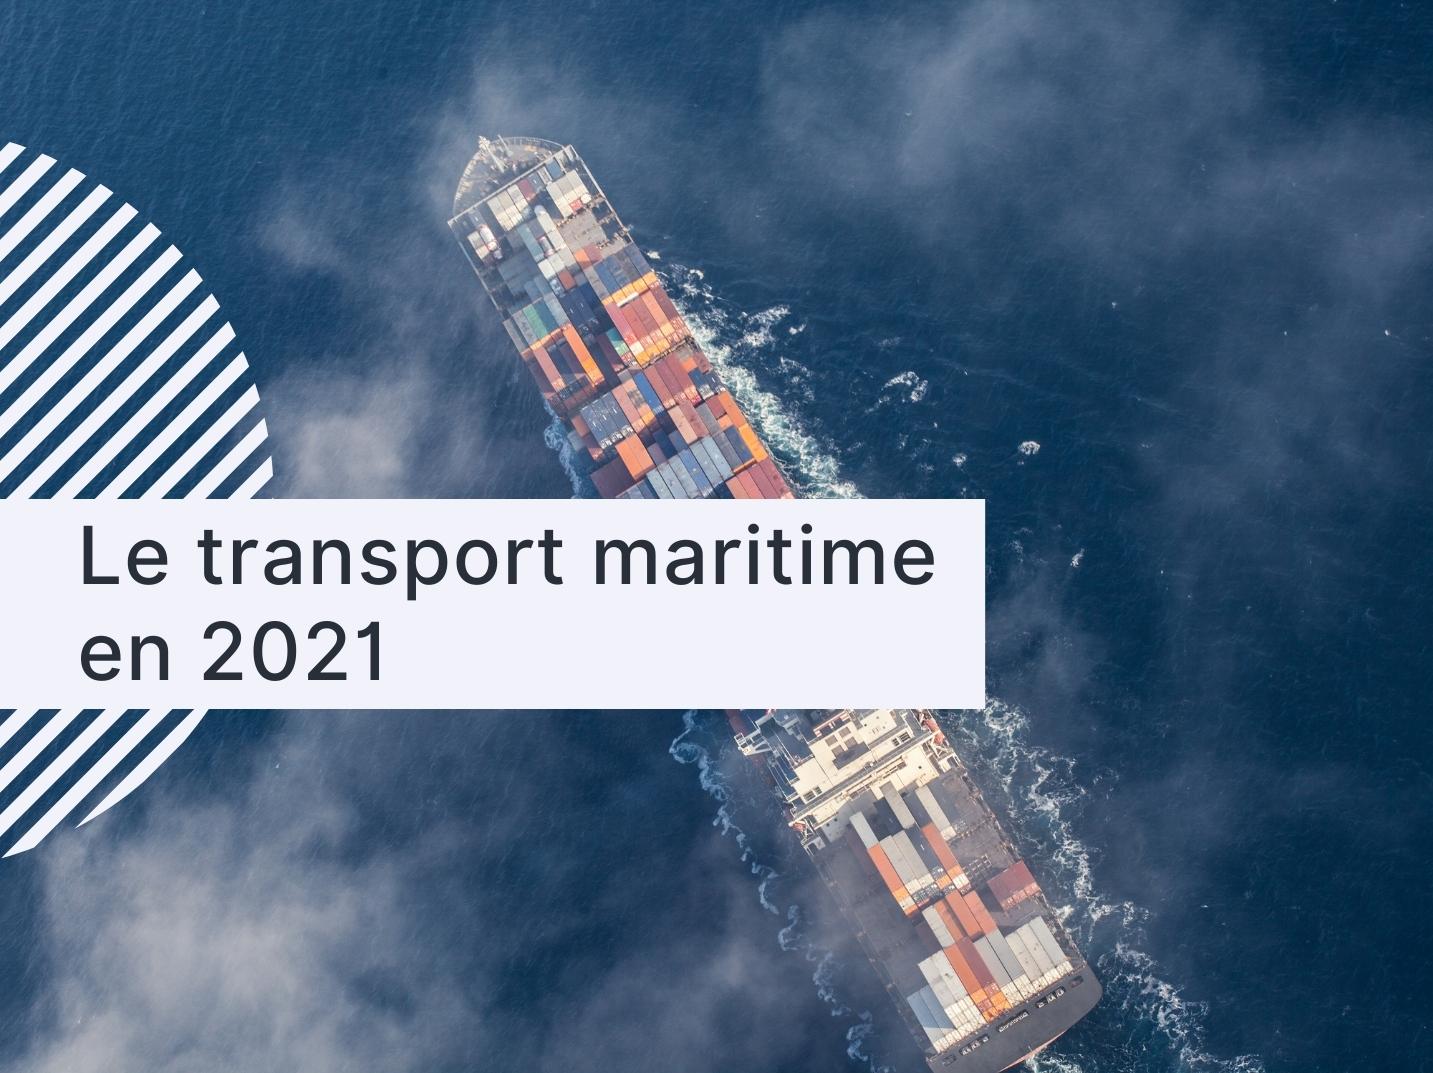 Les perspectives du transport maritime en 2021